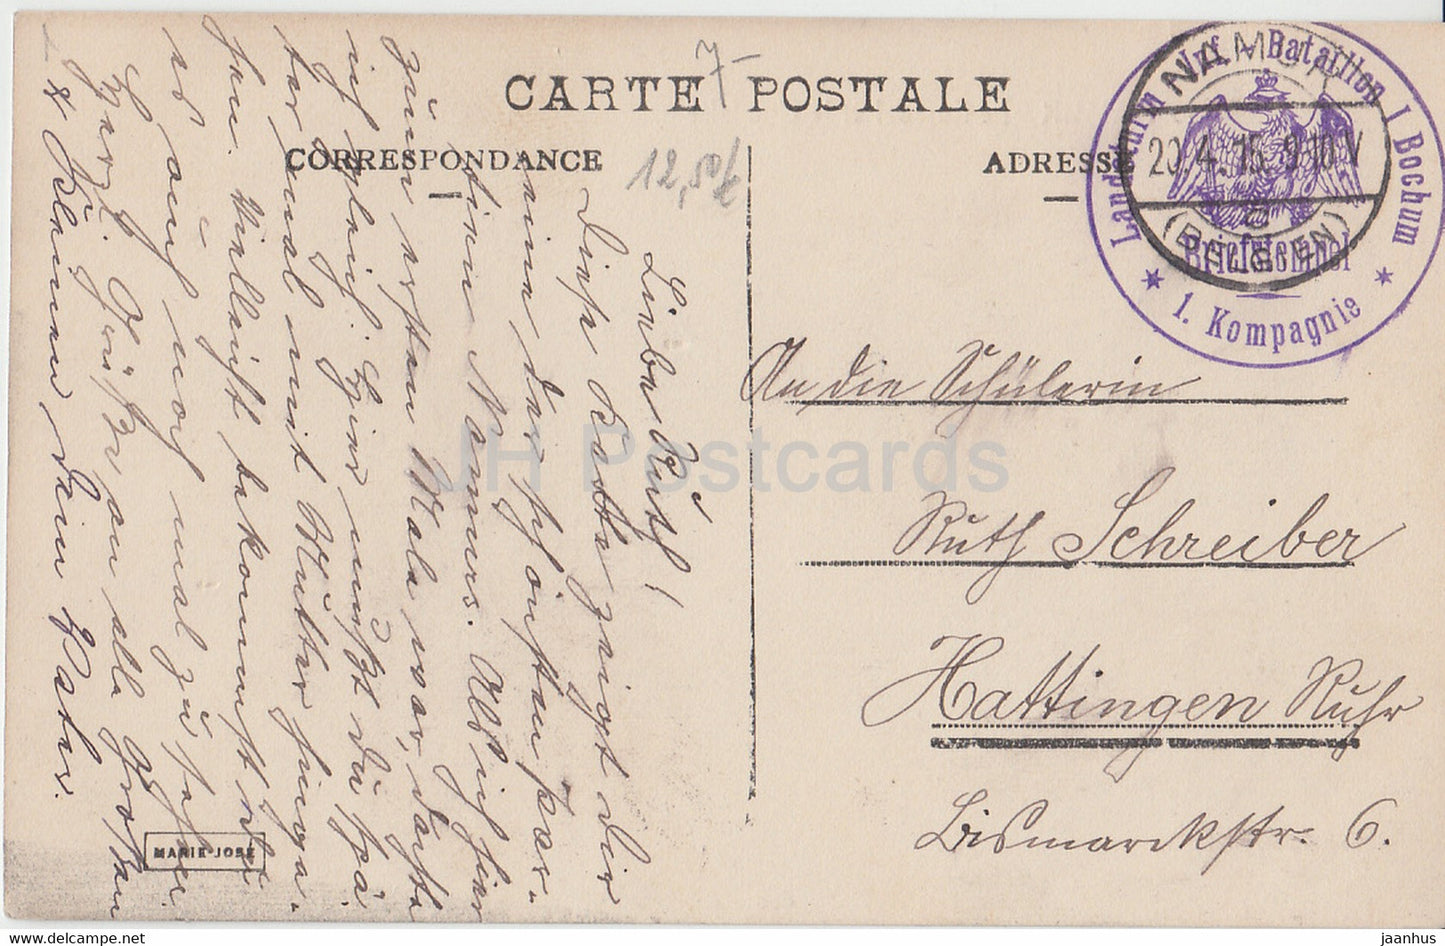 Namur - Le Kursaal et le Citadelle - Landsturm Inf Bataillon I Bochum - Feldpost - alte Postkarte - Belgien - gebraucht